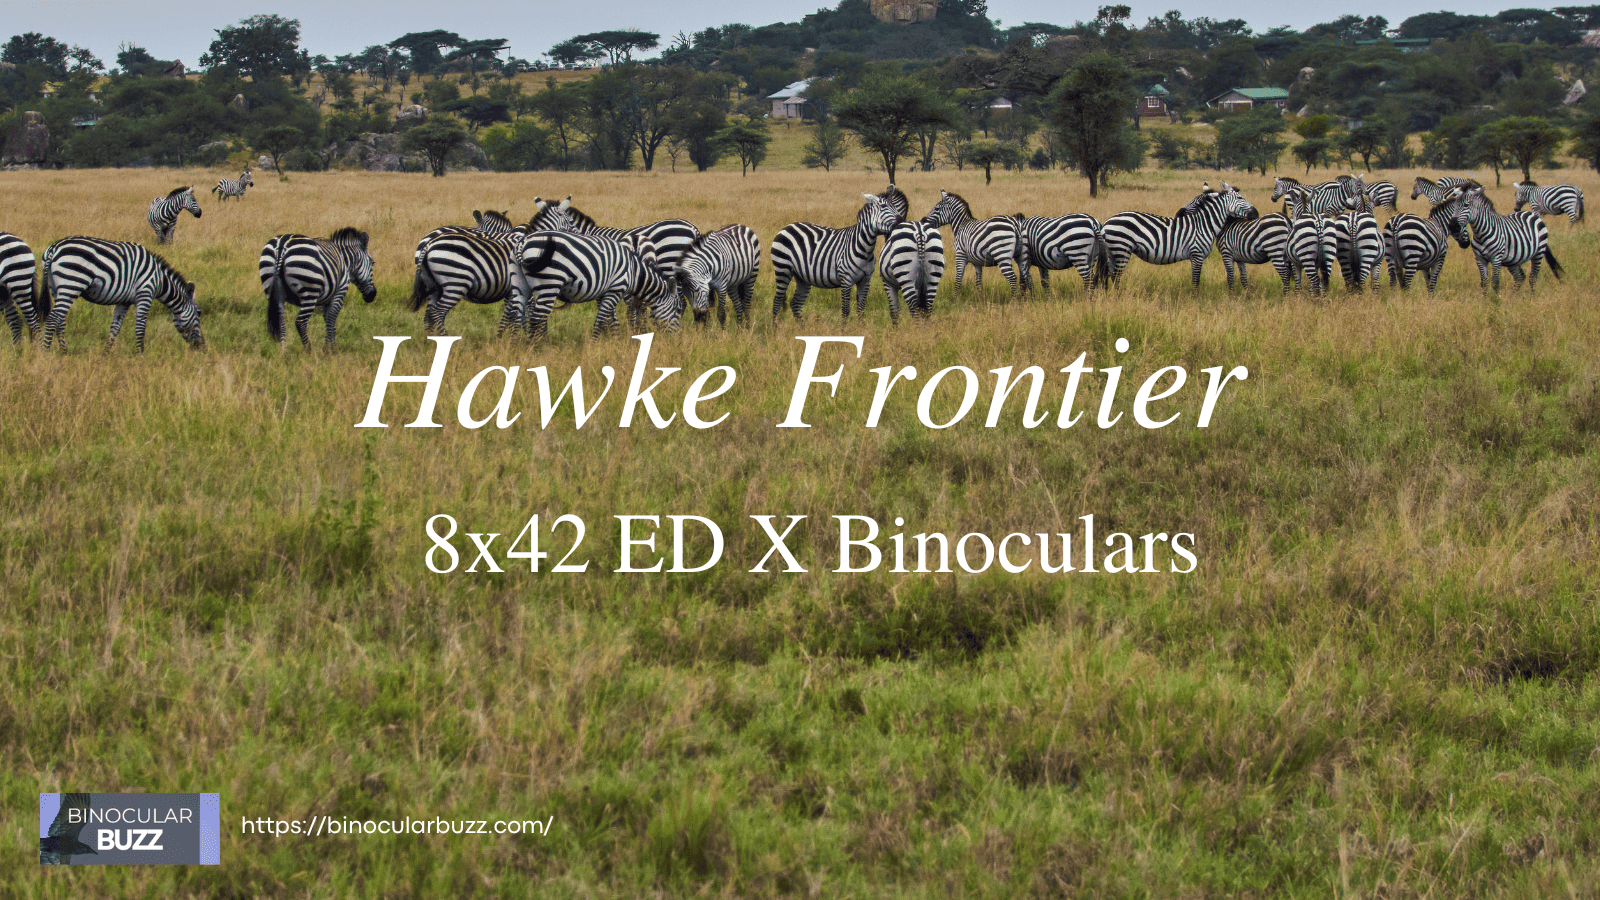 Hawke Frontier 8x42 ED X Binoculars Review